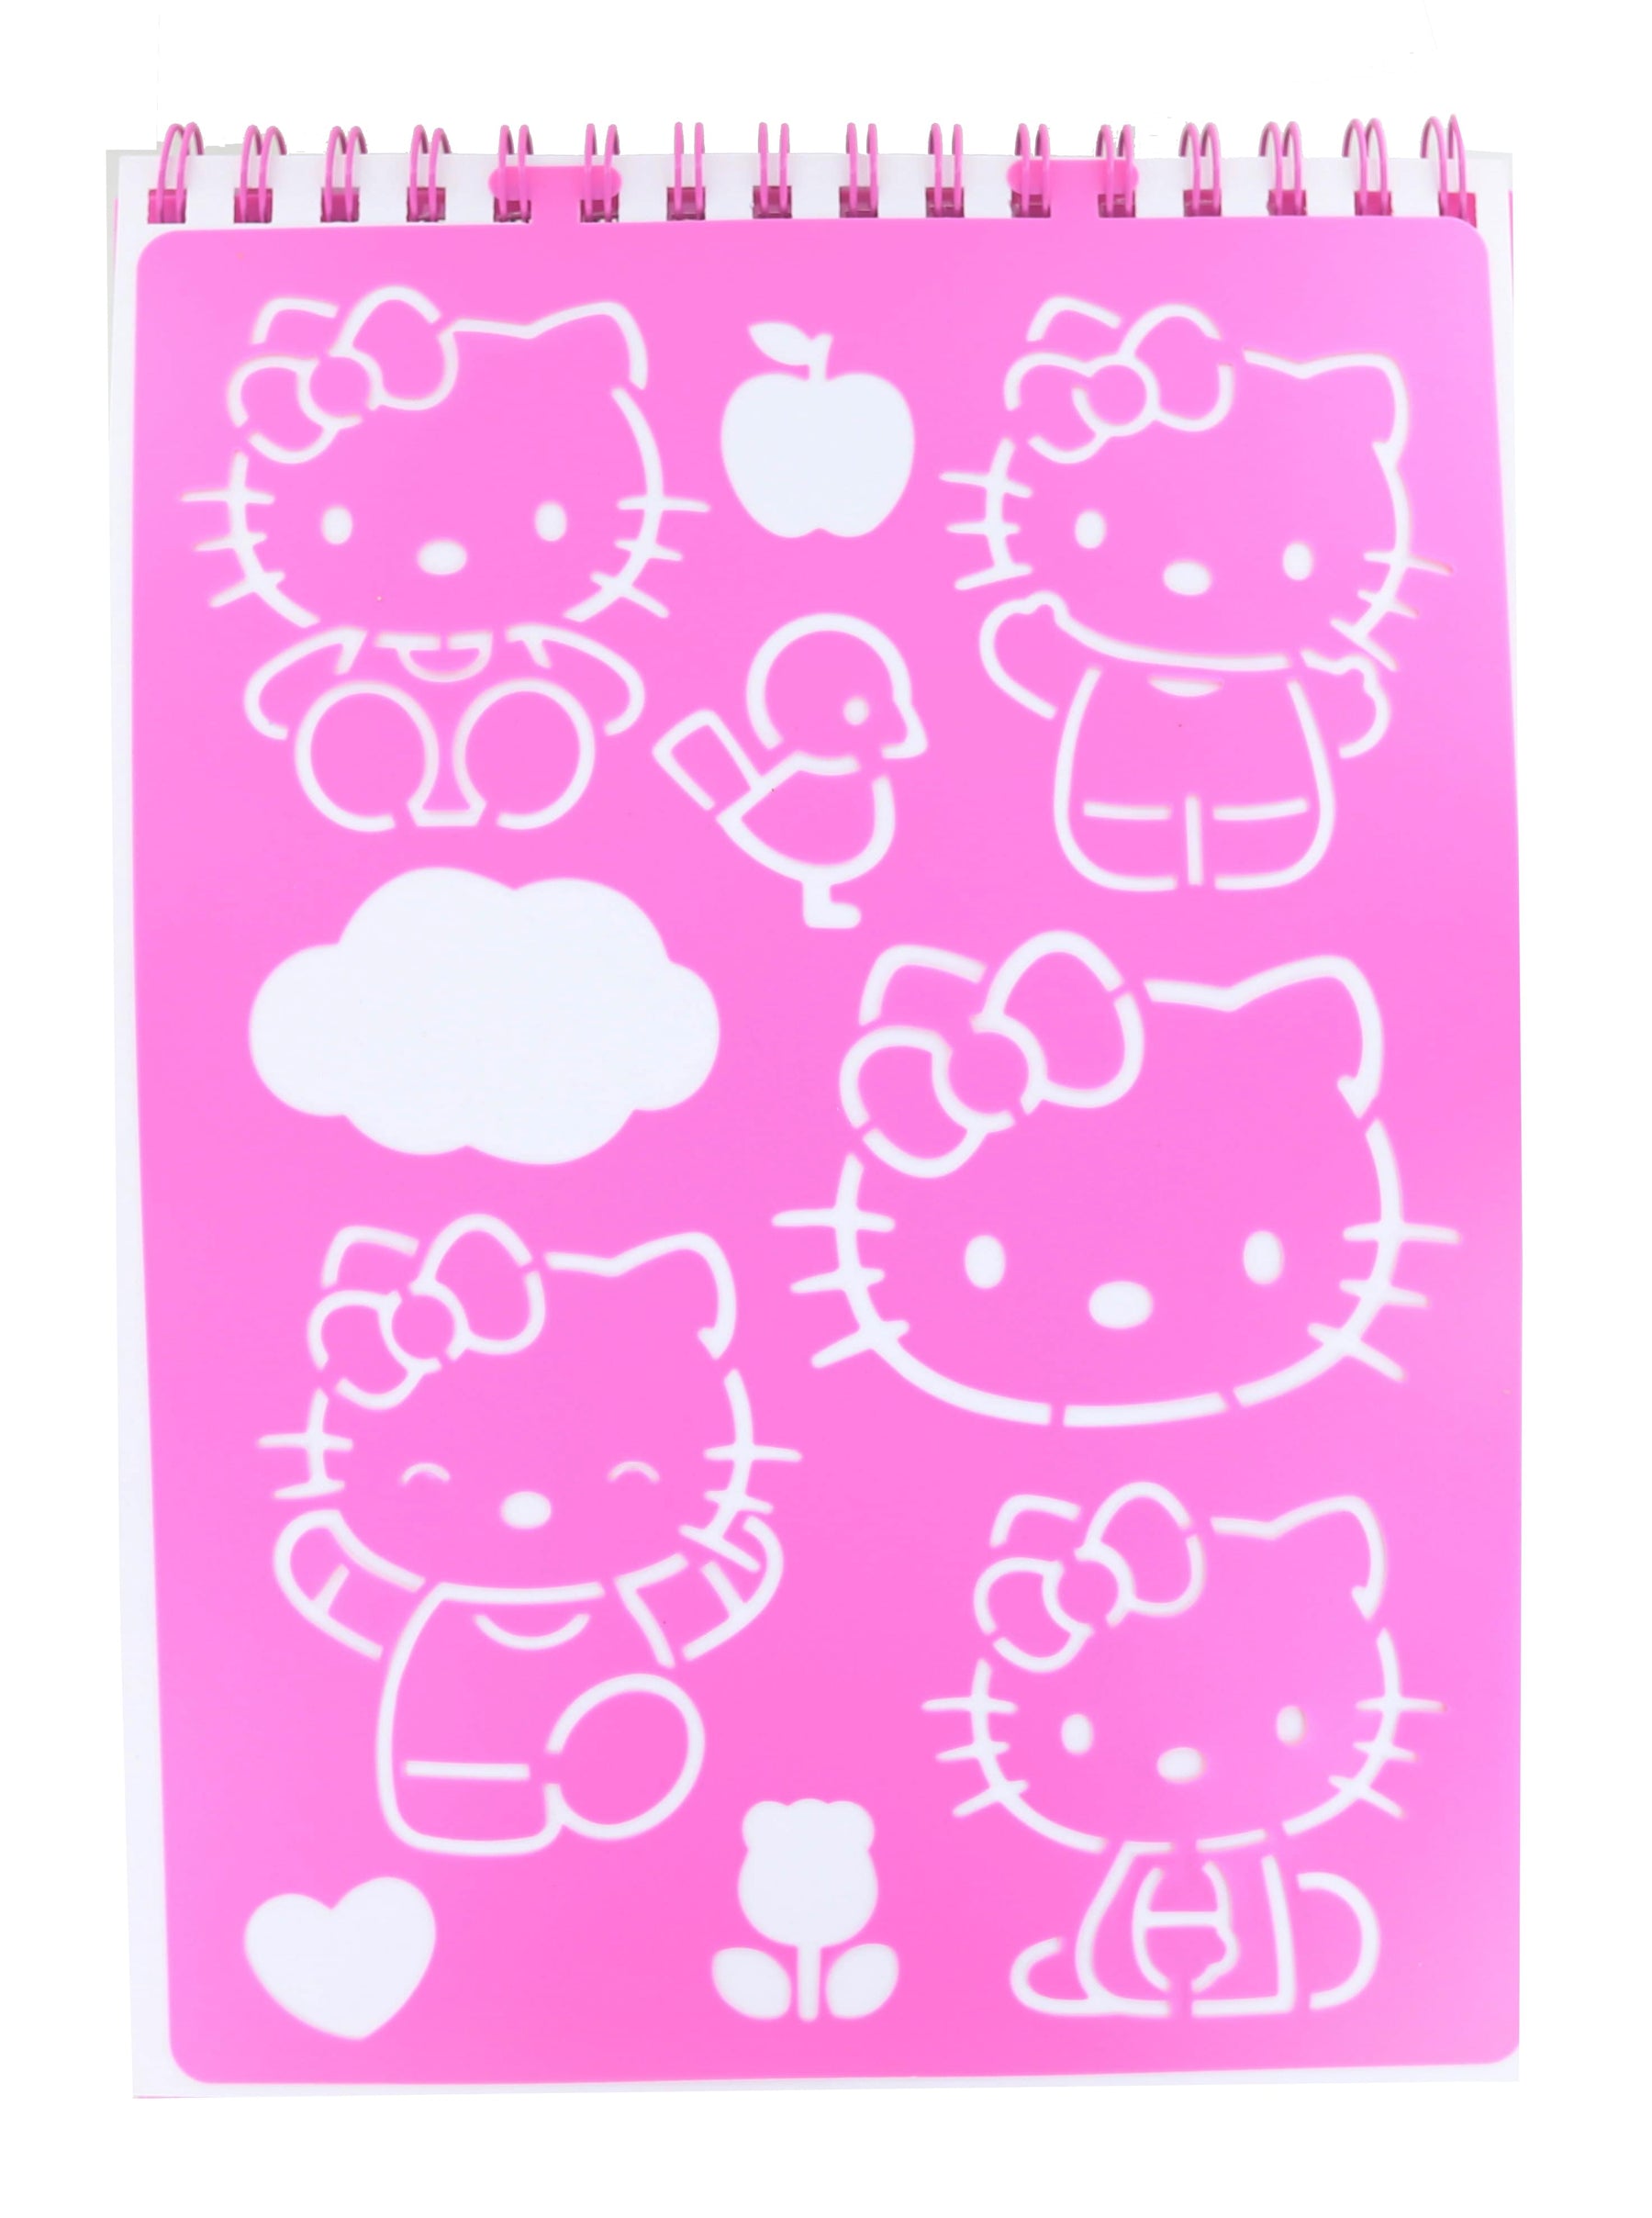 Hello Kitty Activity Sketchbook | 30 Sheets